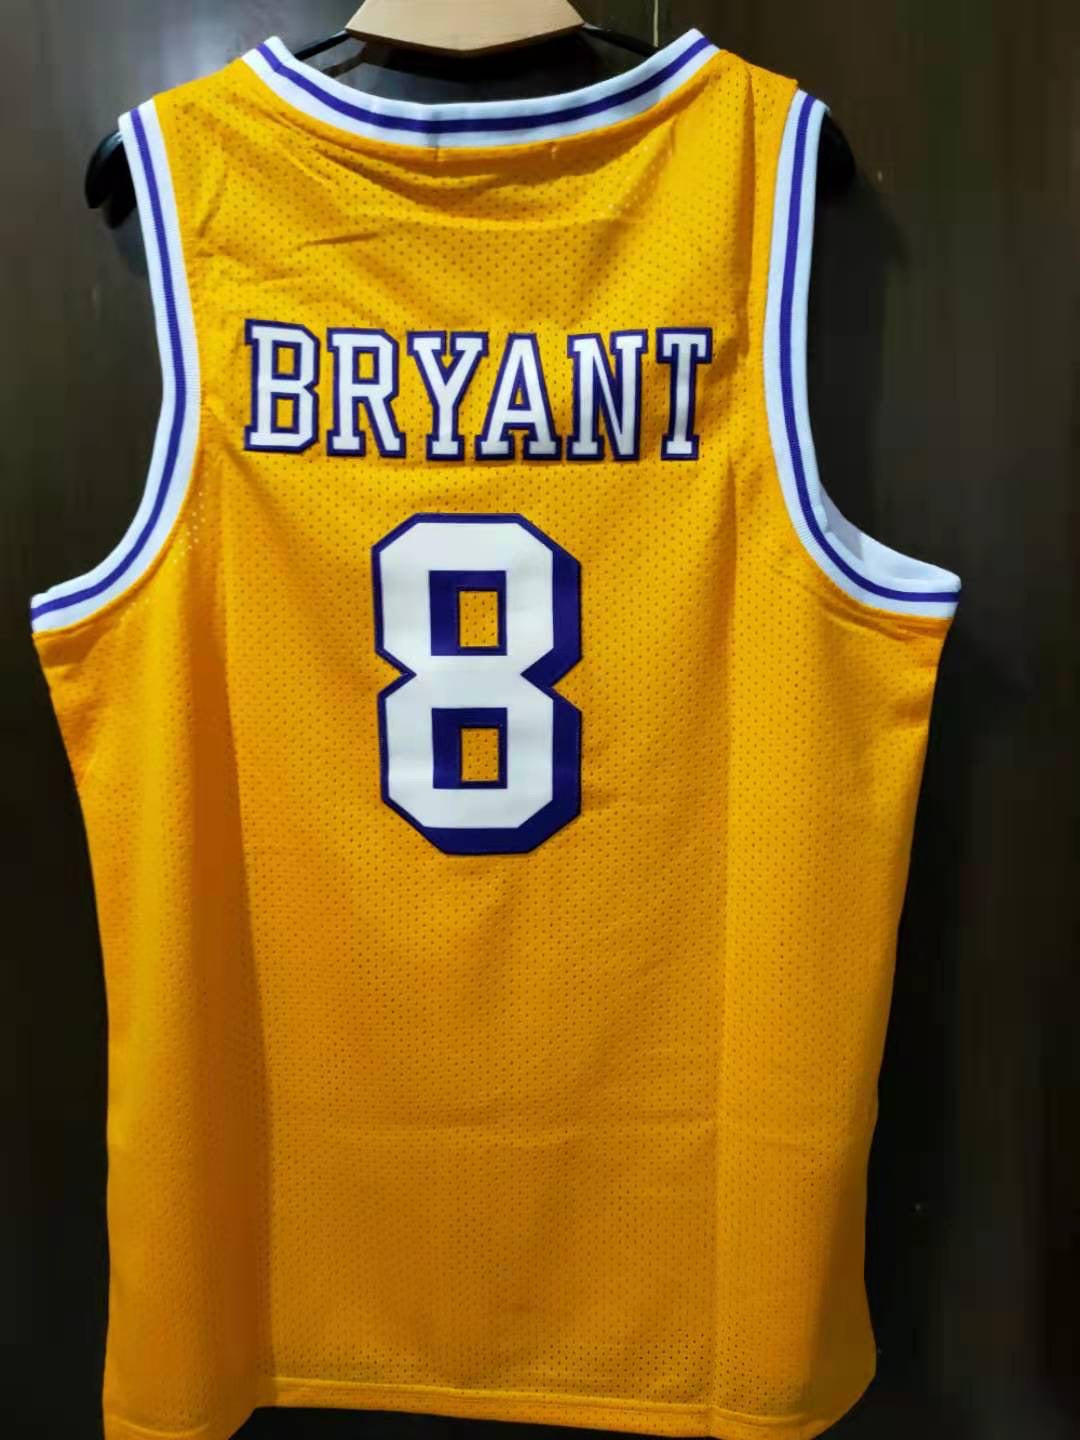 Kobe Bryant Los Angeles Lakers Jersey Yellow